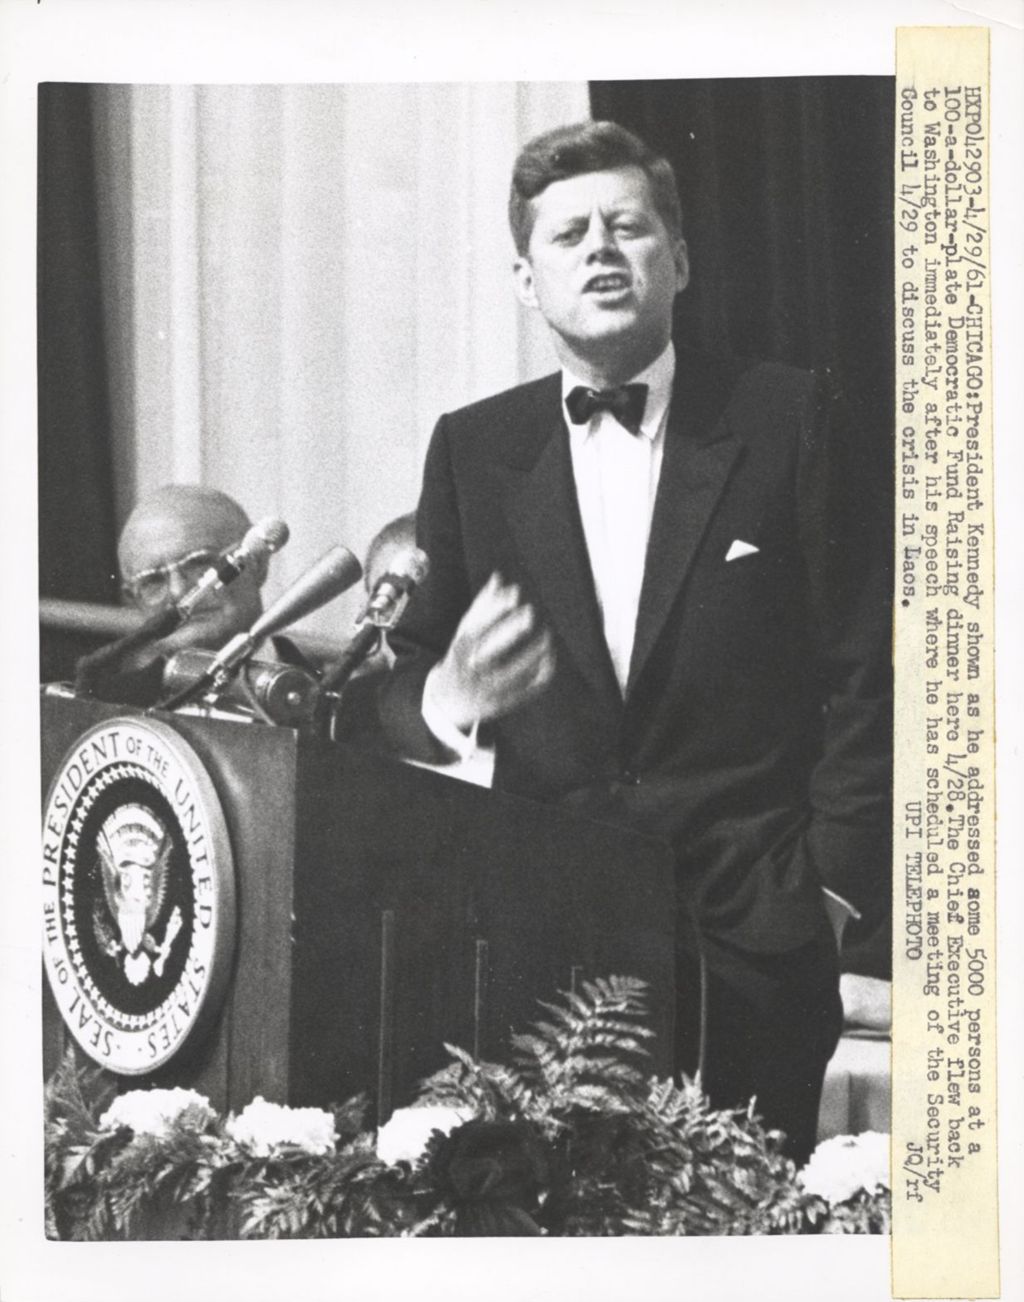 John F. Kennedy speaking at Democratic fundraising dinner